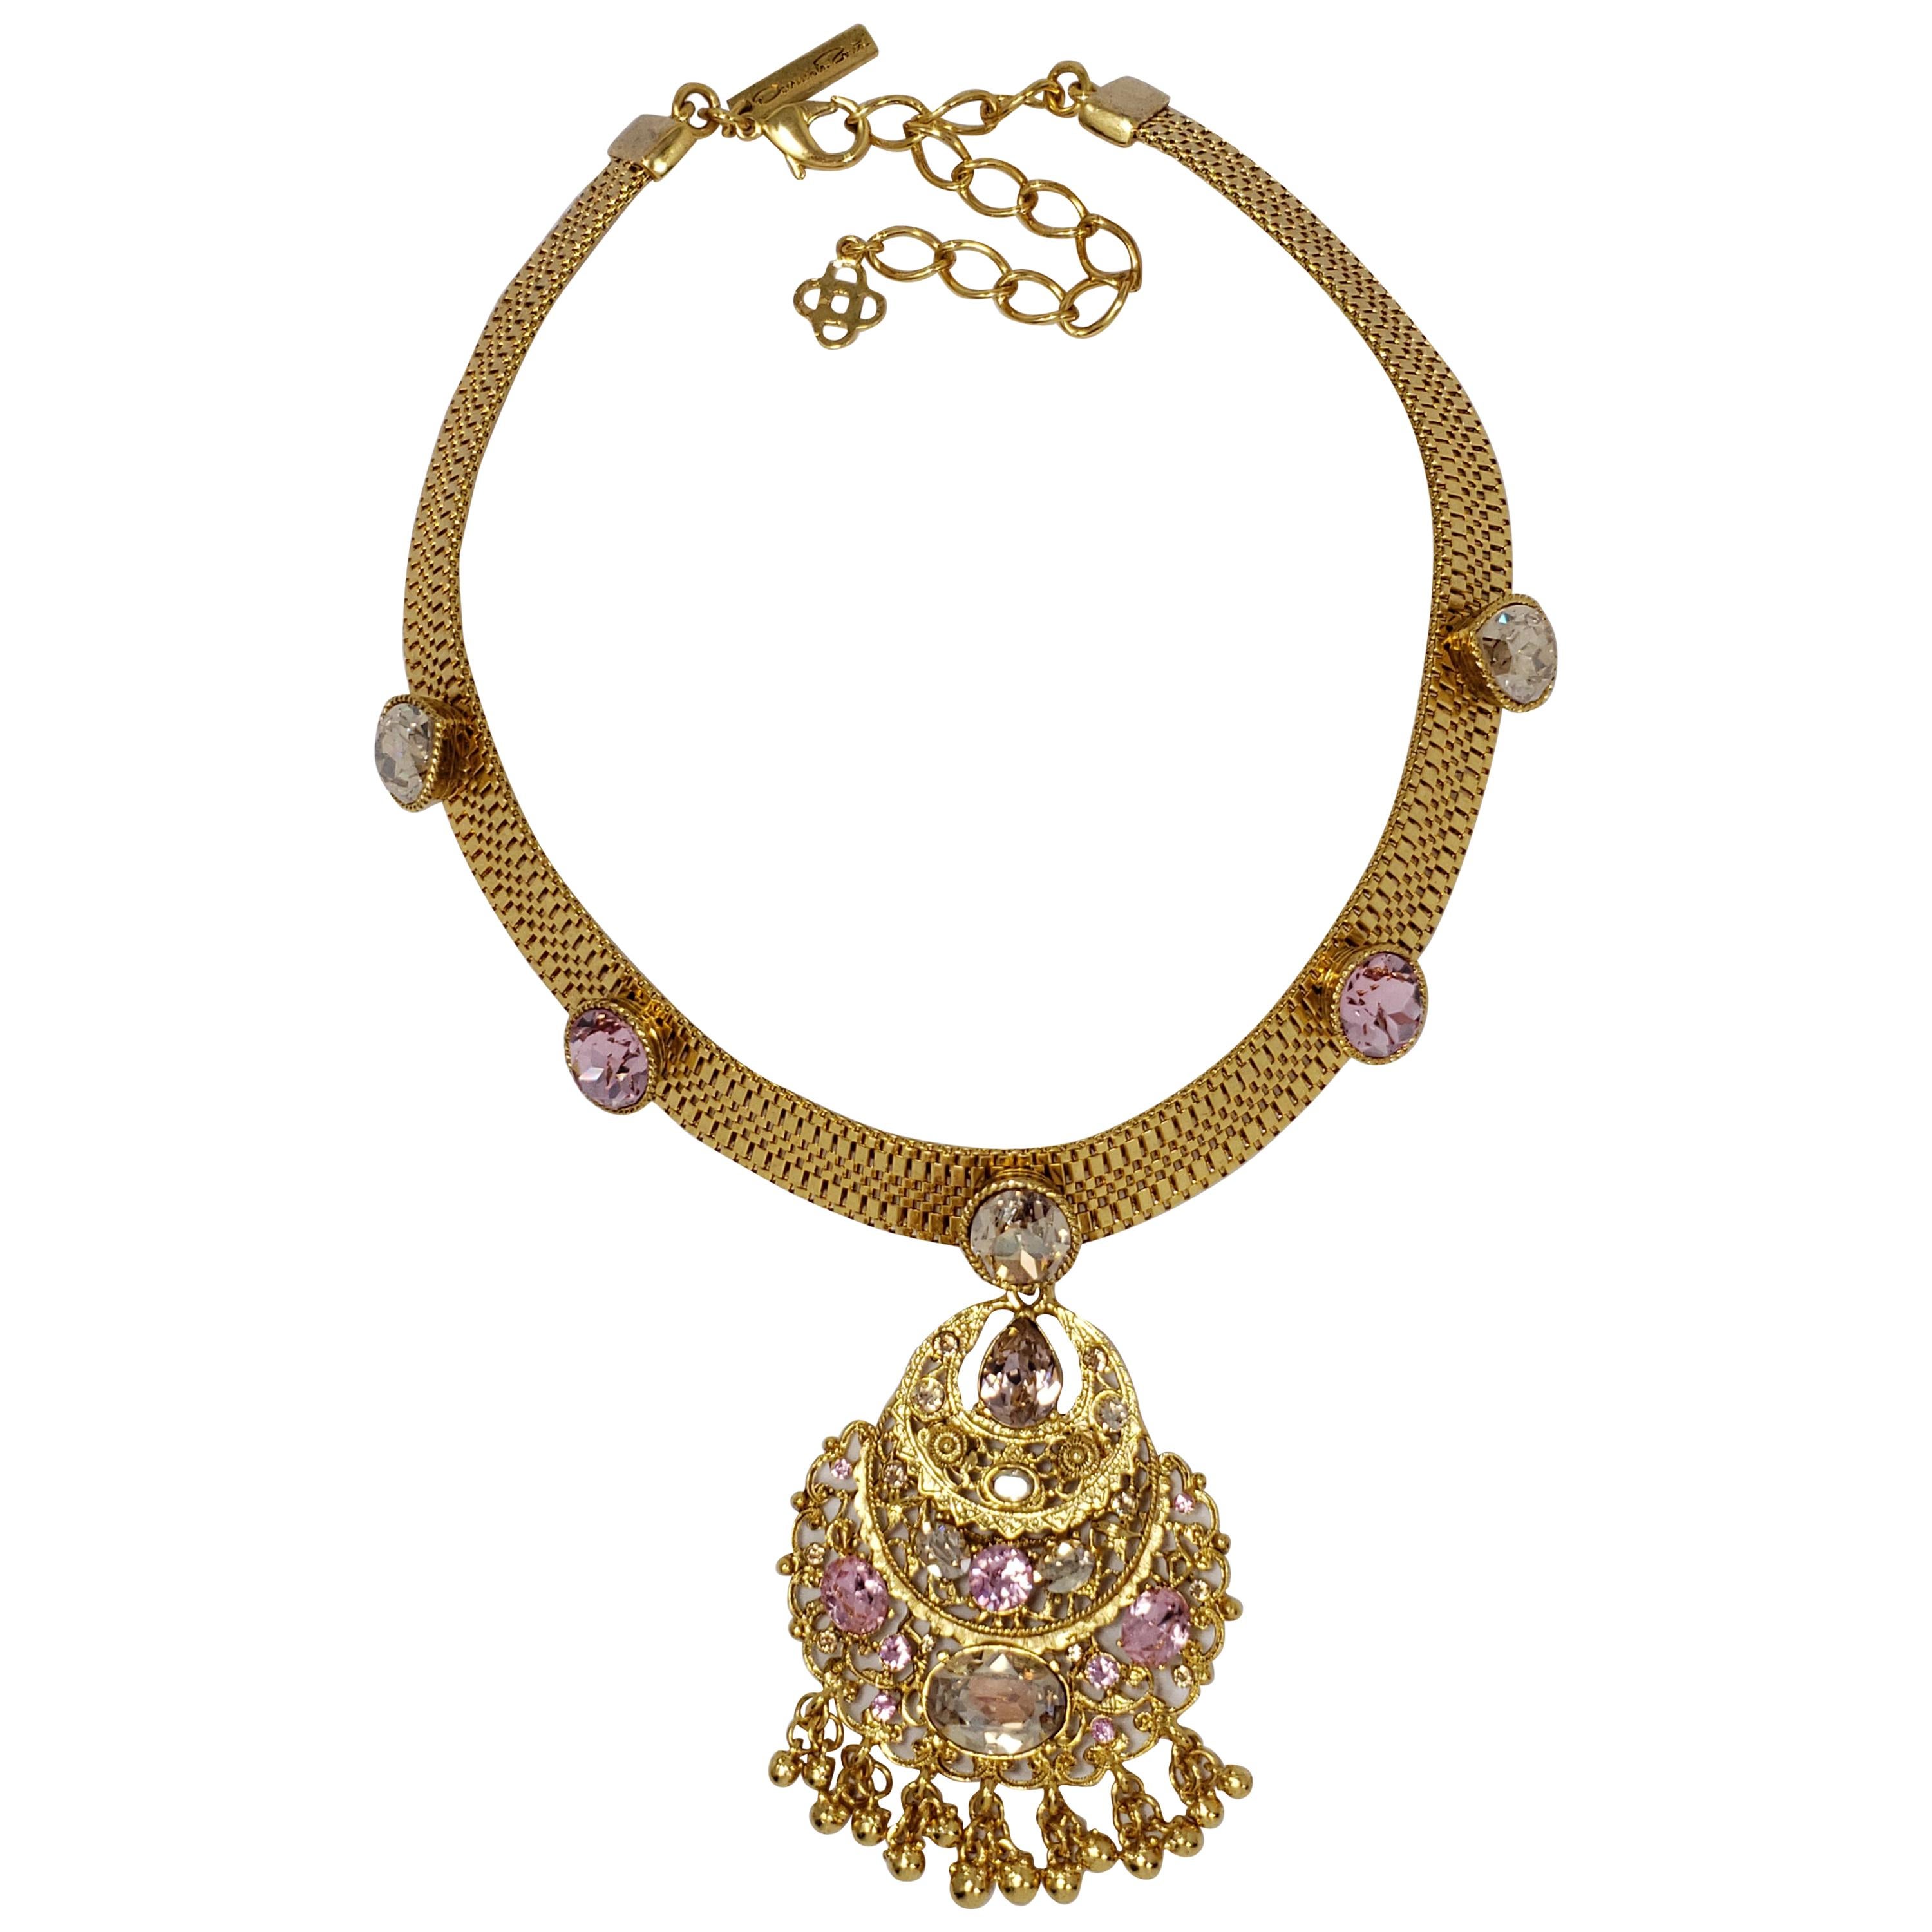 Oscar de la Renta Jeweled Collar Necklace in Gold, Rose and Topaz Crystals